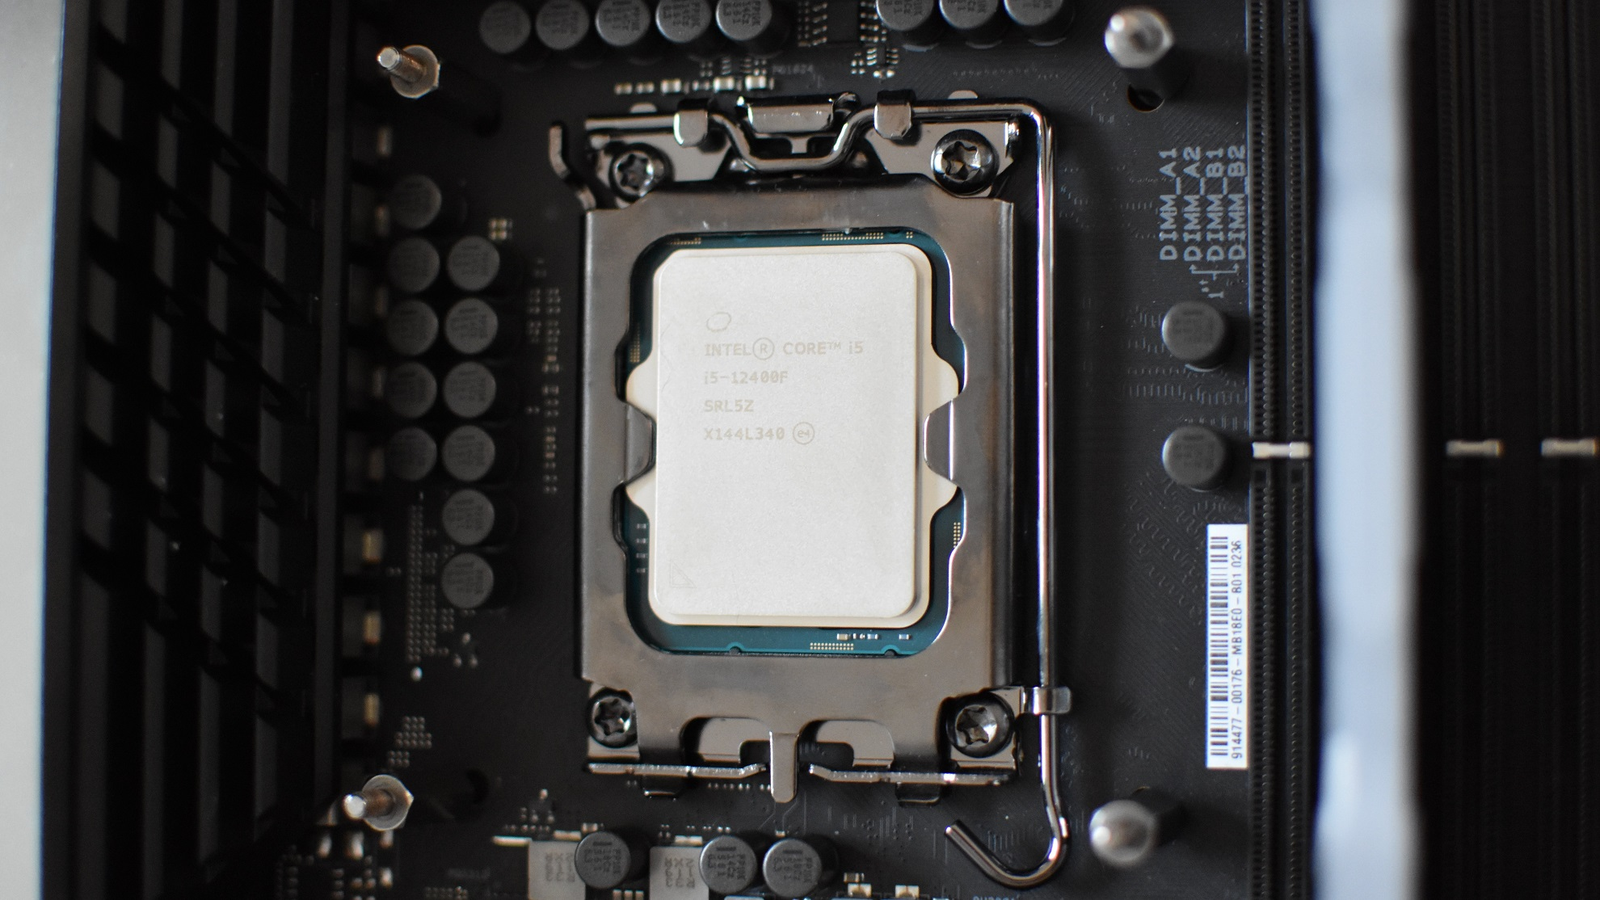 Intel Core i5-12400 review - TechGaming